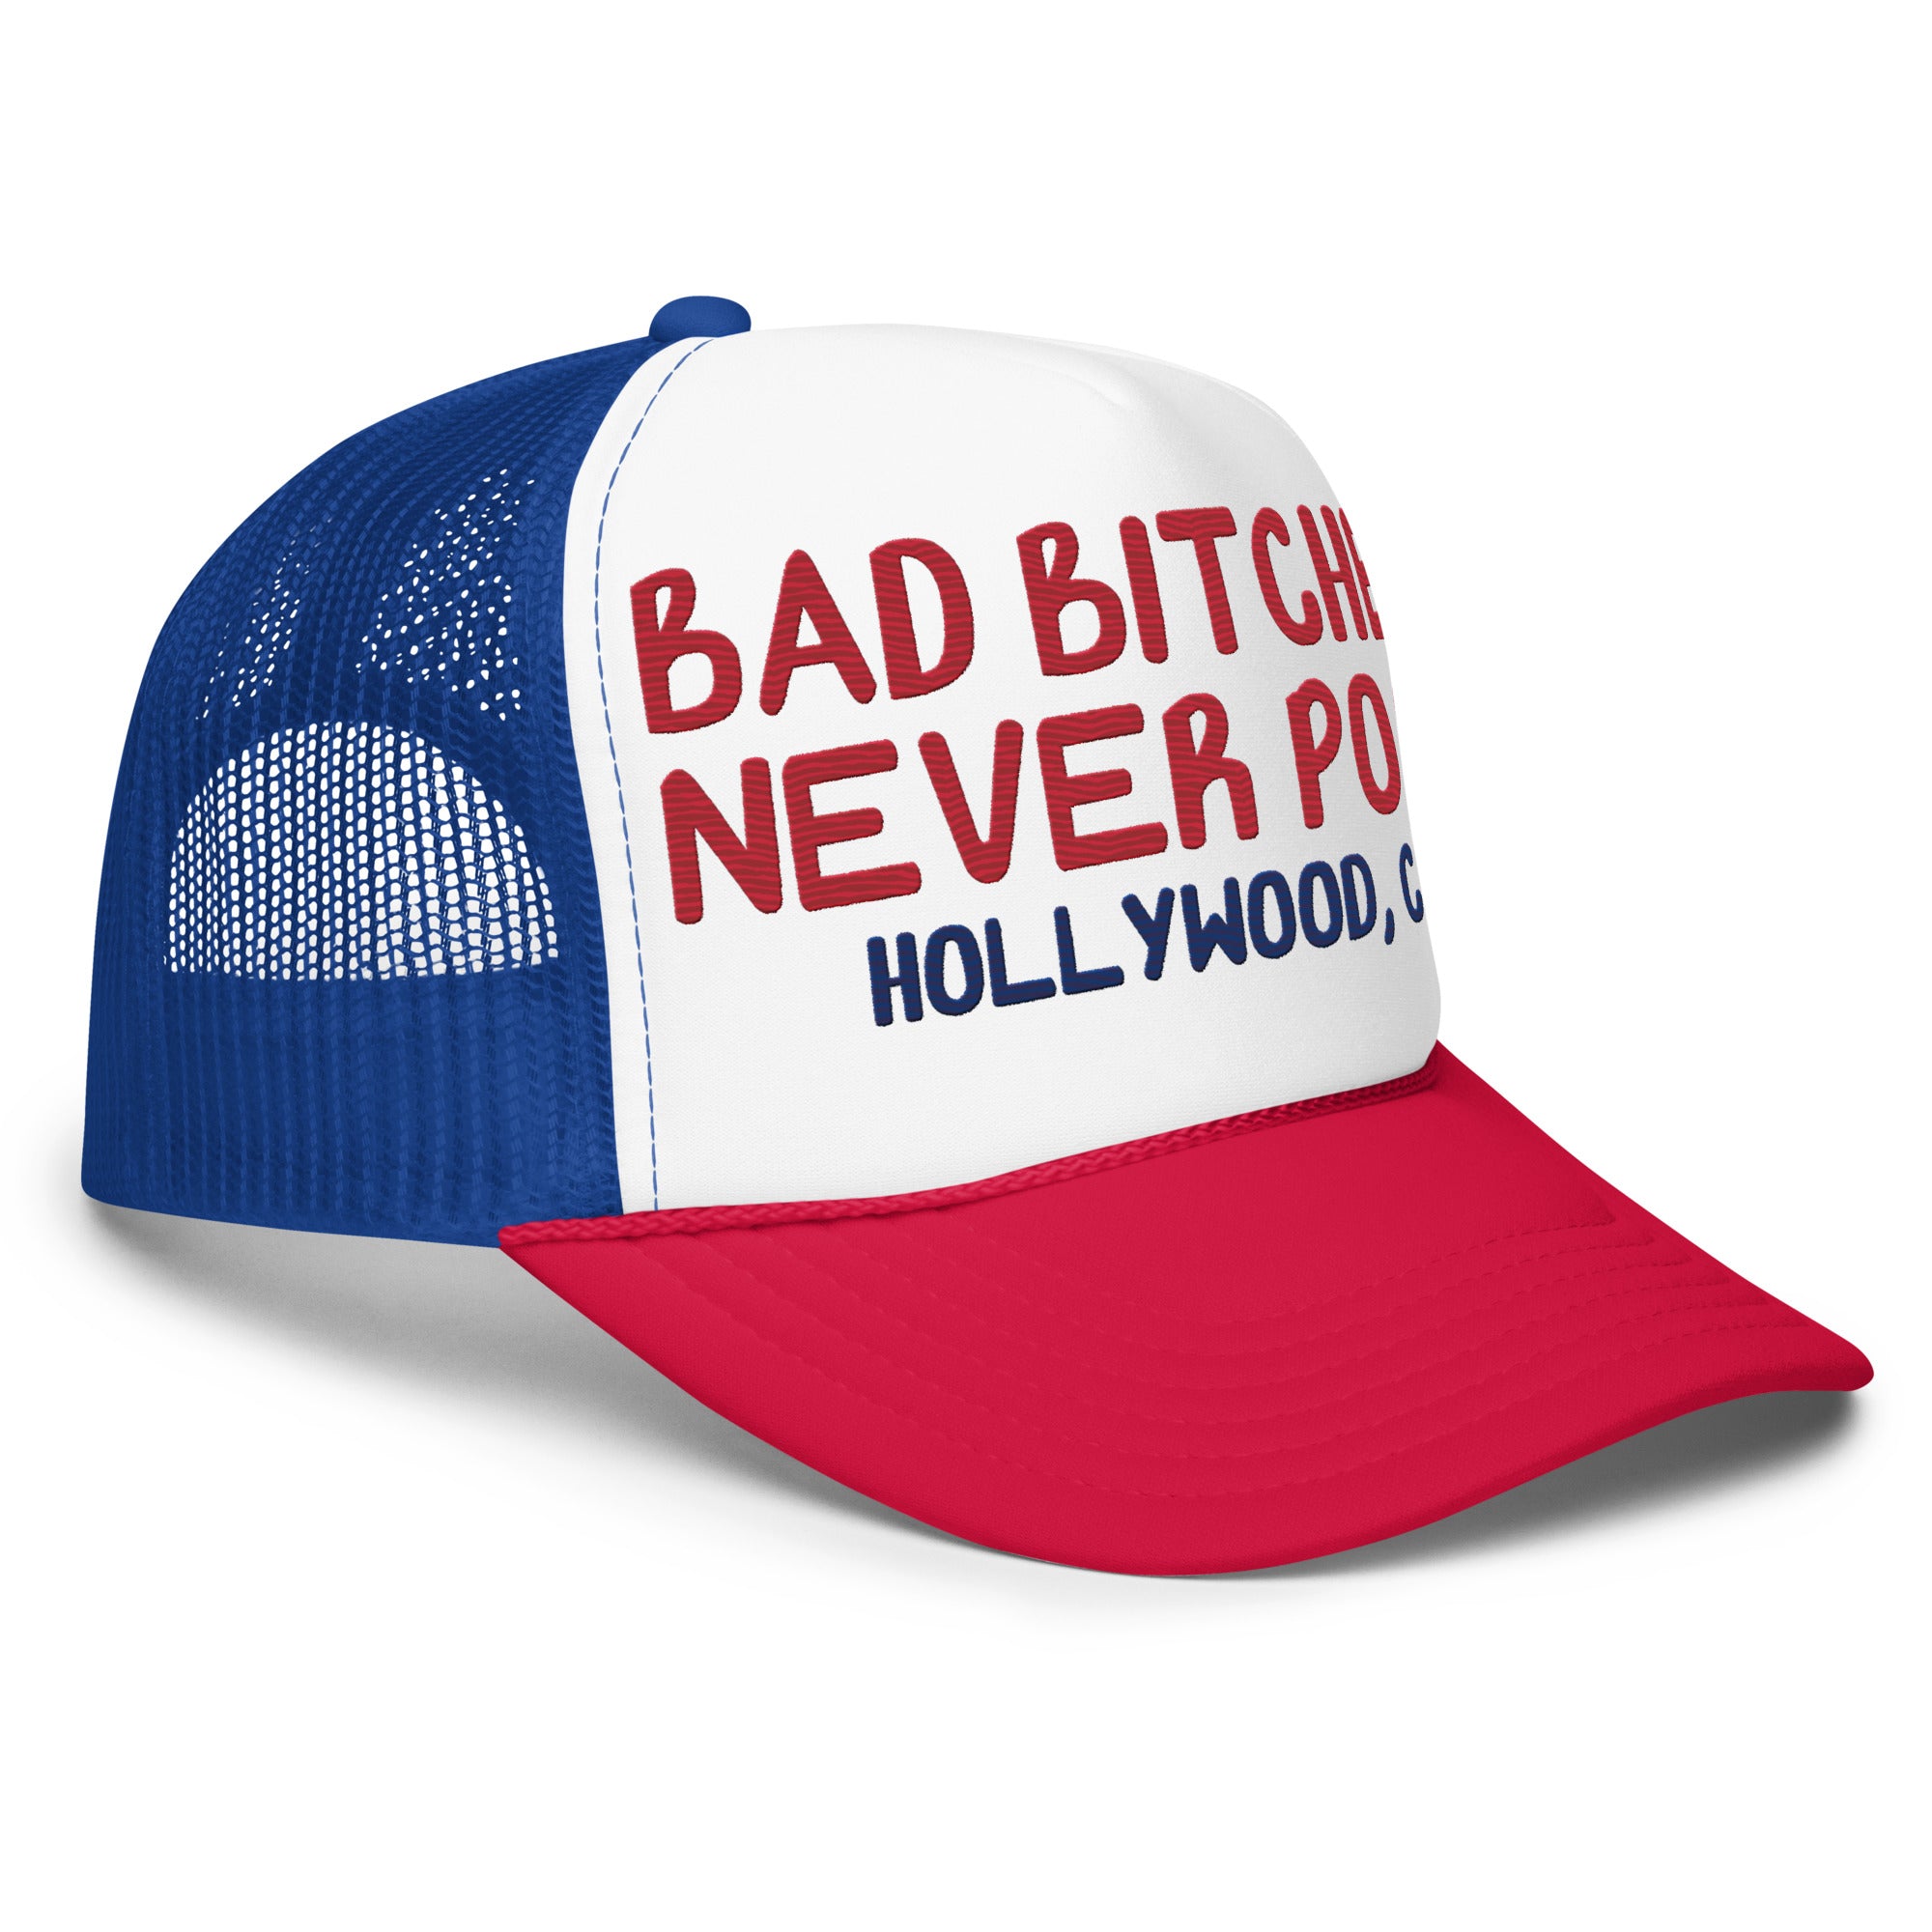 Bad B's Never Post Hat - RWB